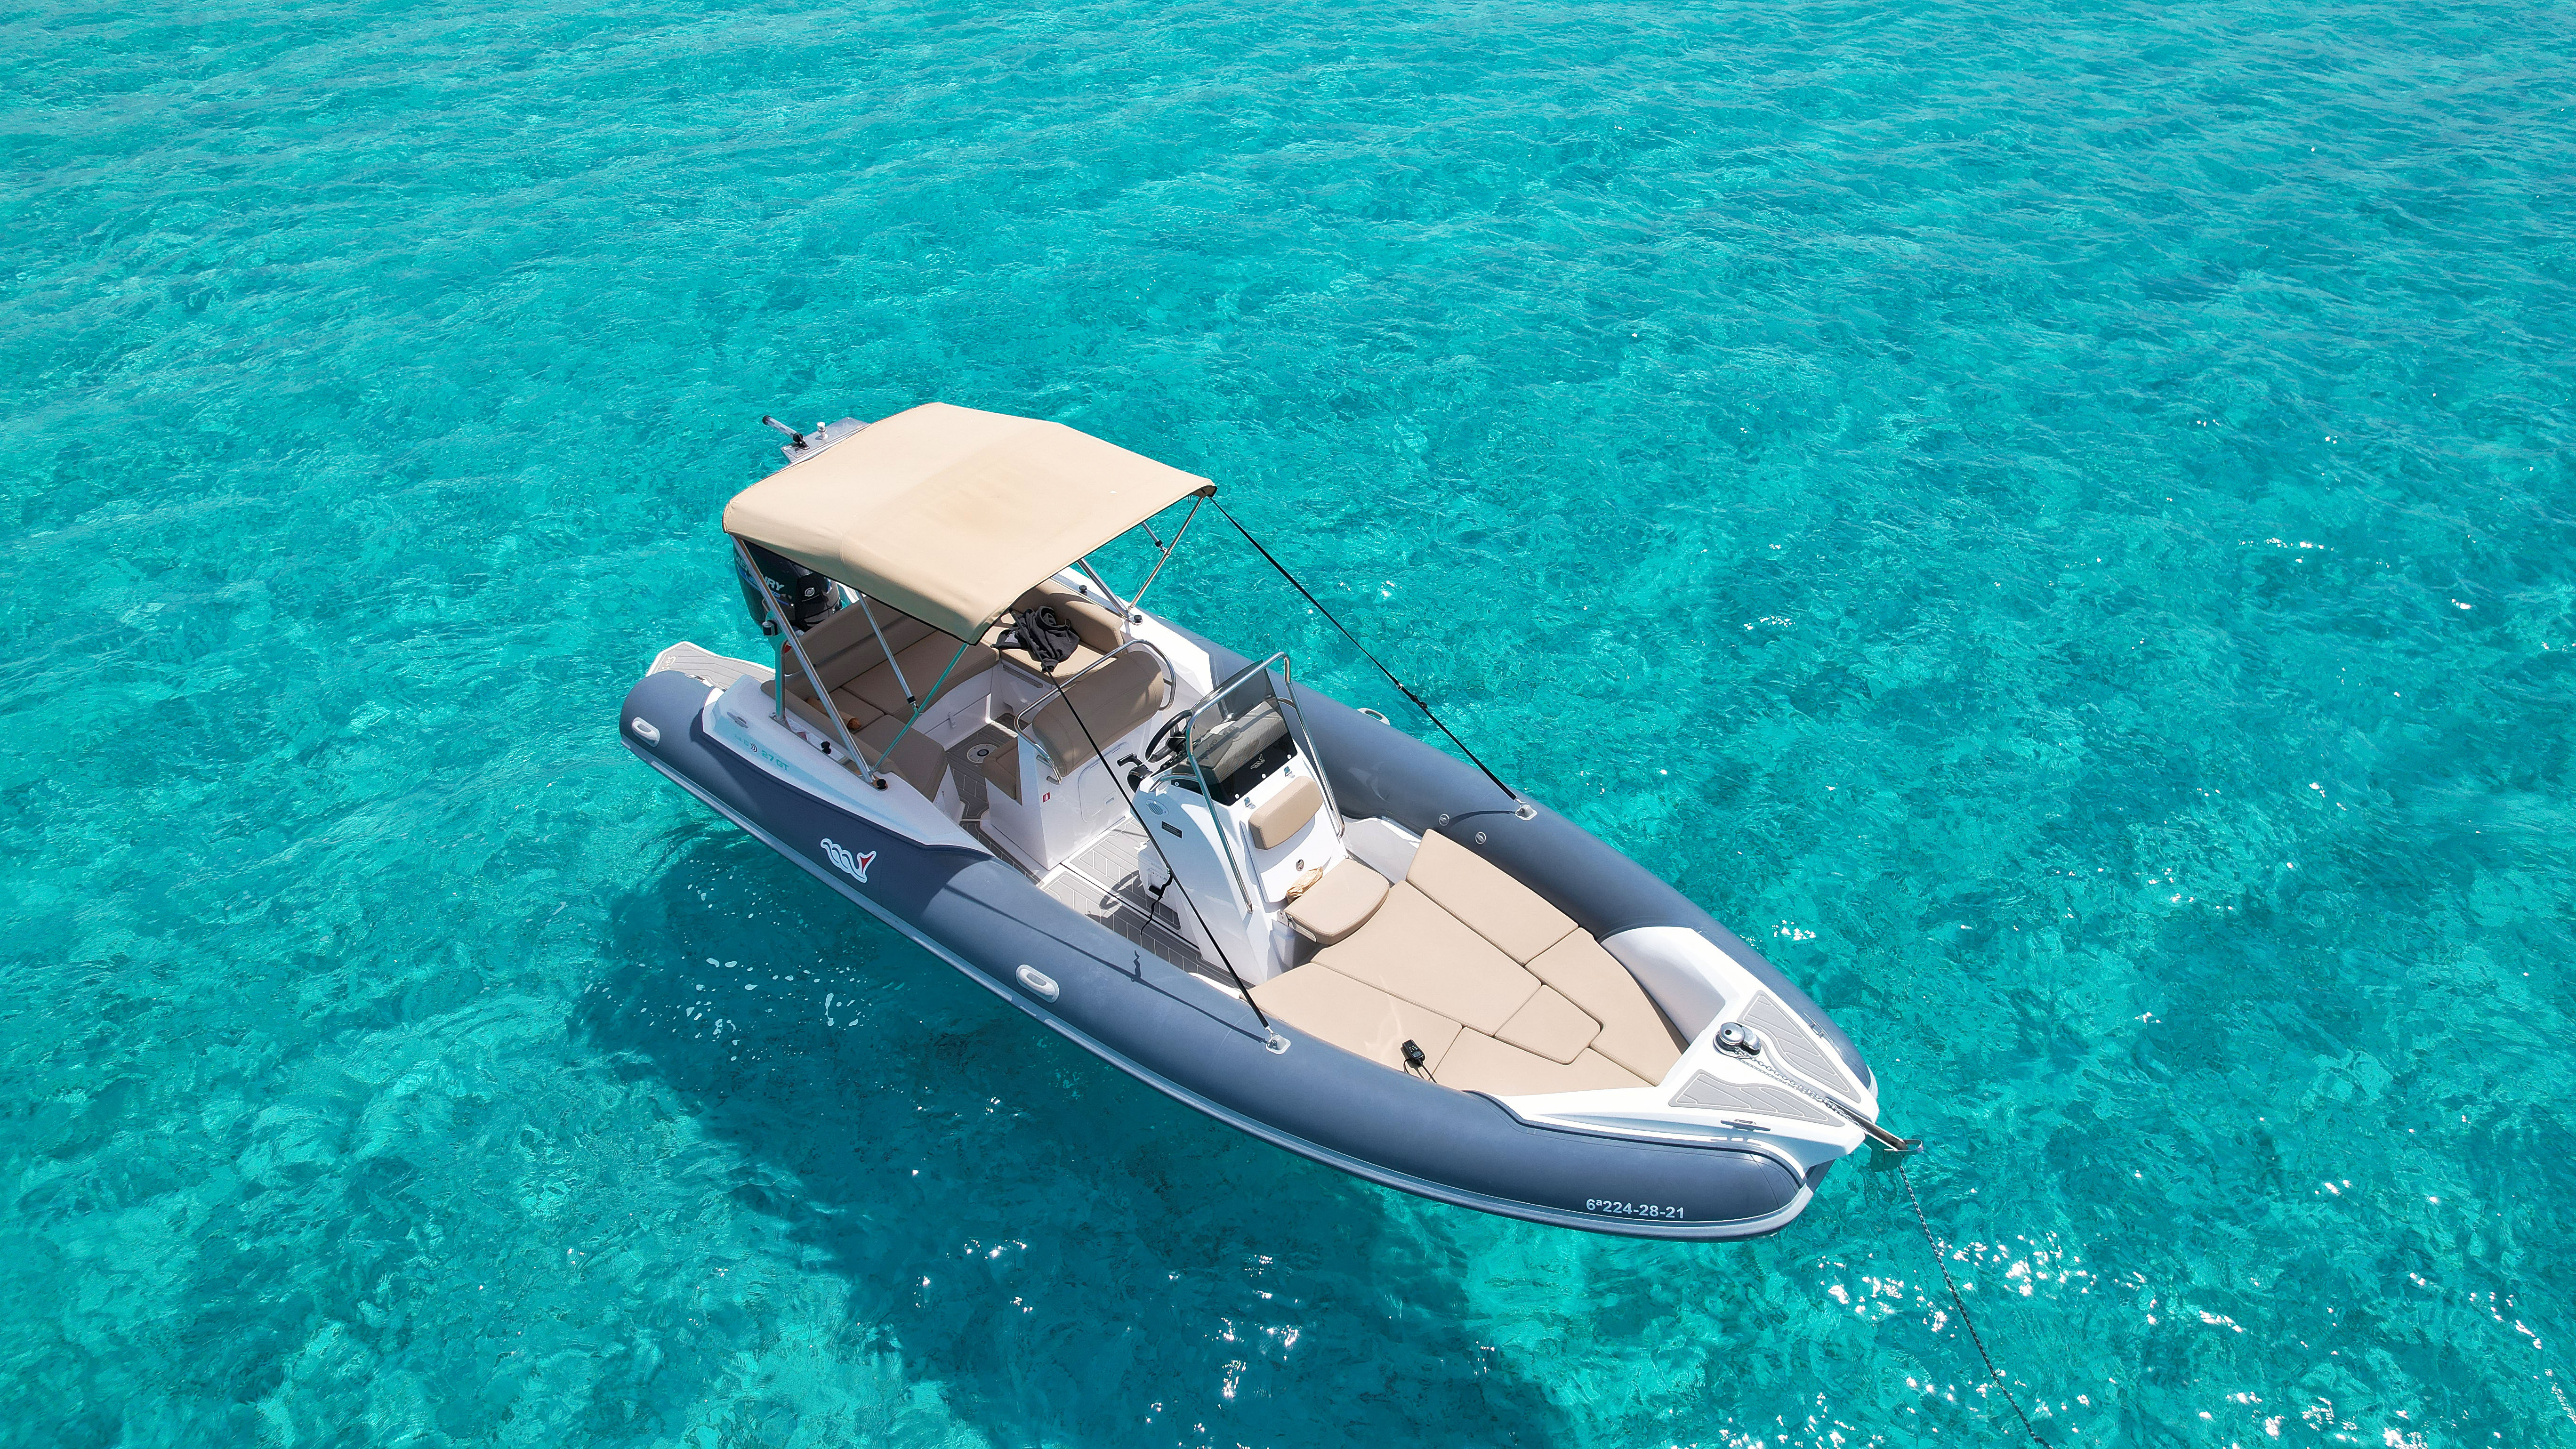 Neumatic Semir-rigid RIB Ibiza Rental Day Charter MV Marine 27 GT Kona